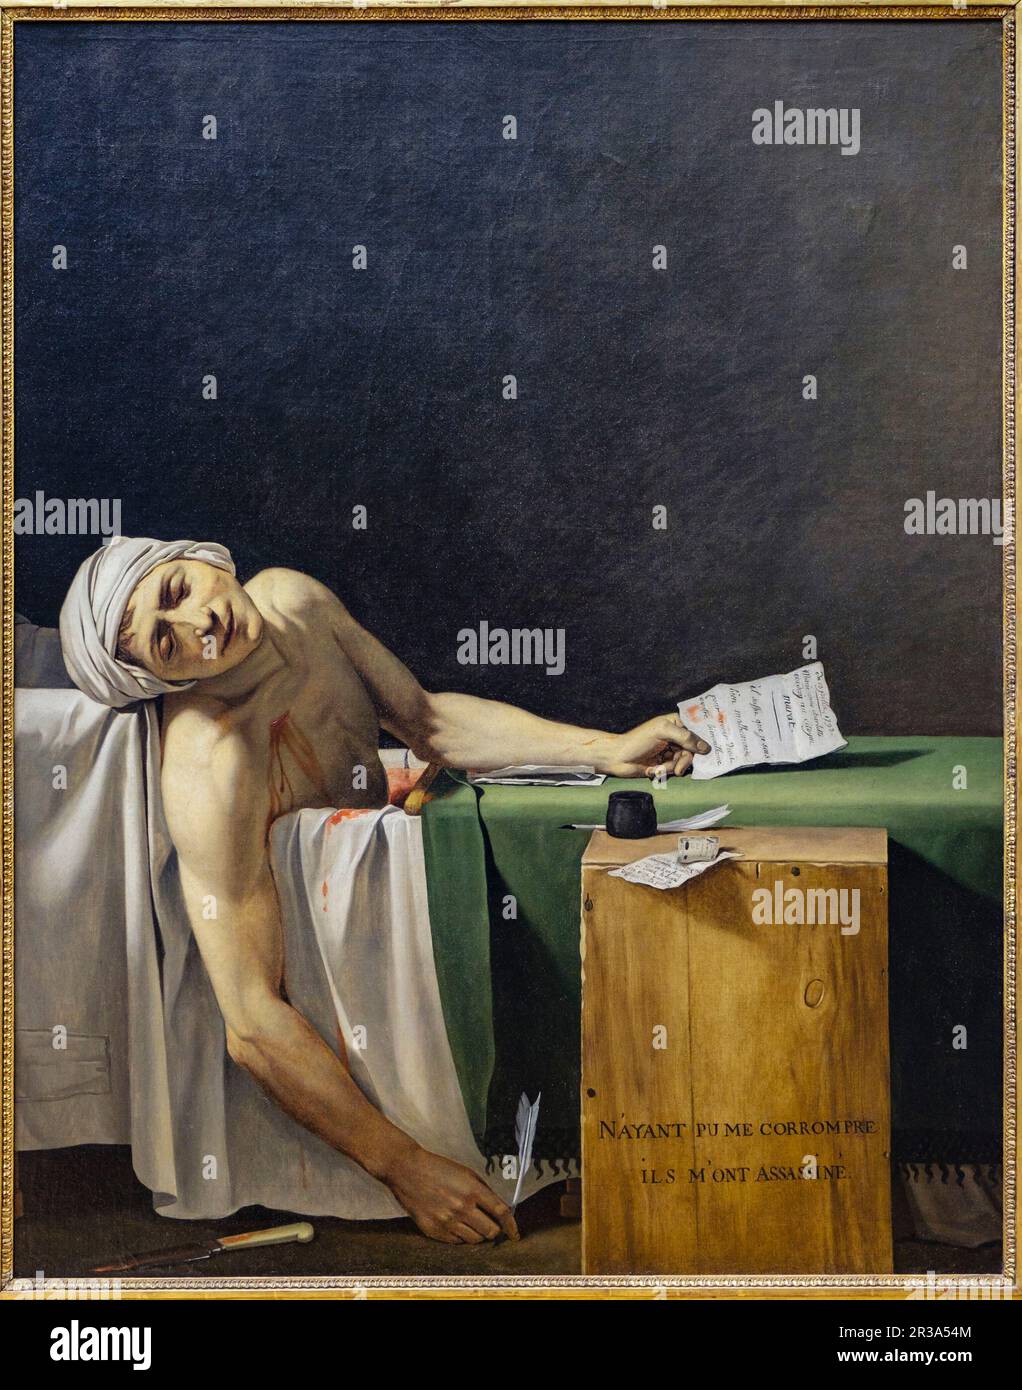 La muerte de Marat,Jacques-Louis David, 1793, oleo sobre lienzo, Neoclasicismo,Museo del Louvre, museo nacional de Francia, Paris, France,Western Europe. Stock Photo